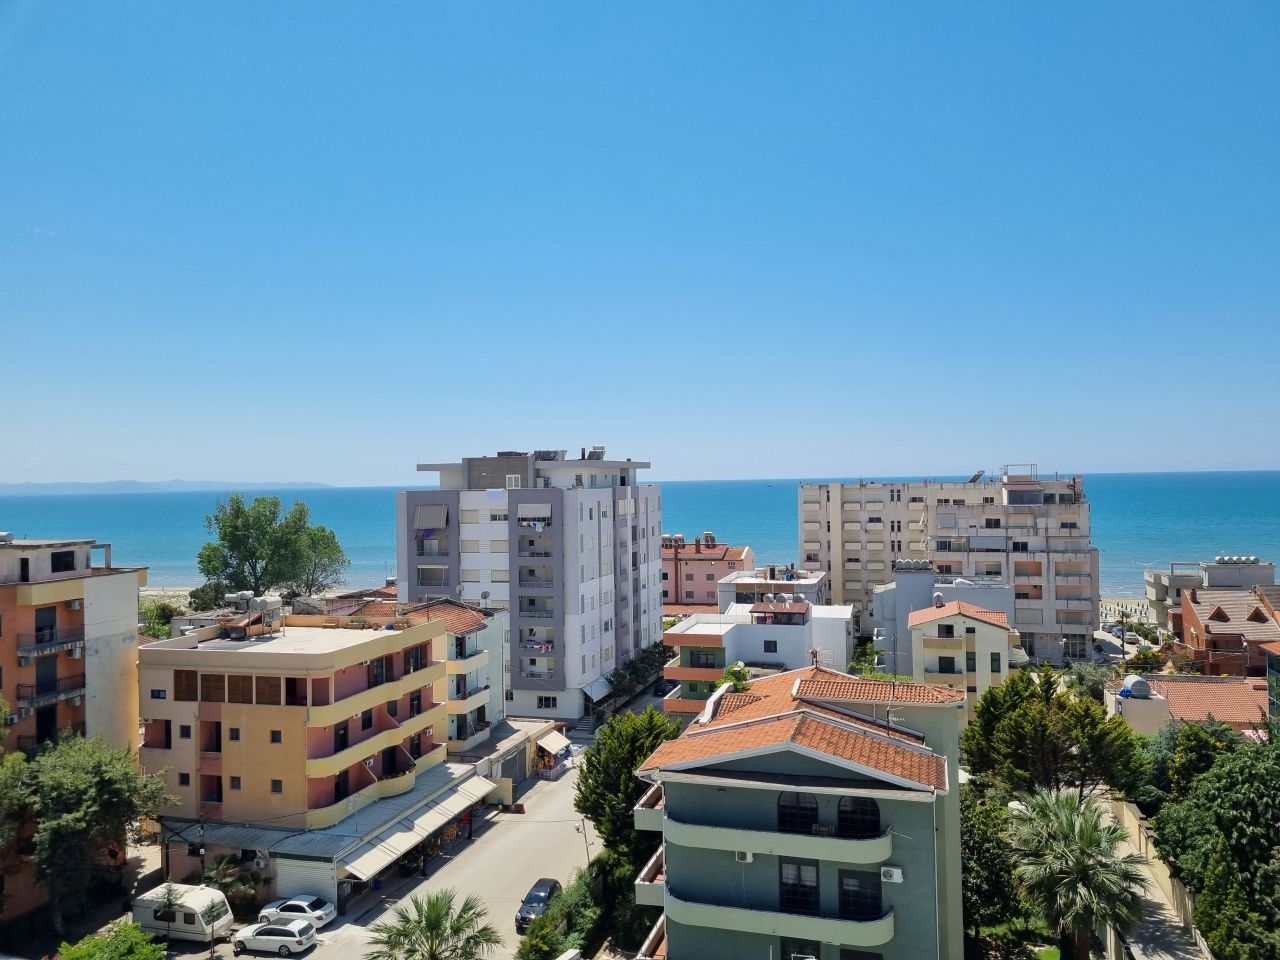 SEA VIEW APARTMENT FOR SALE IN DURRES, ALBANIA